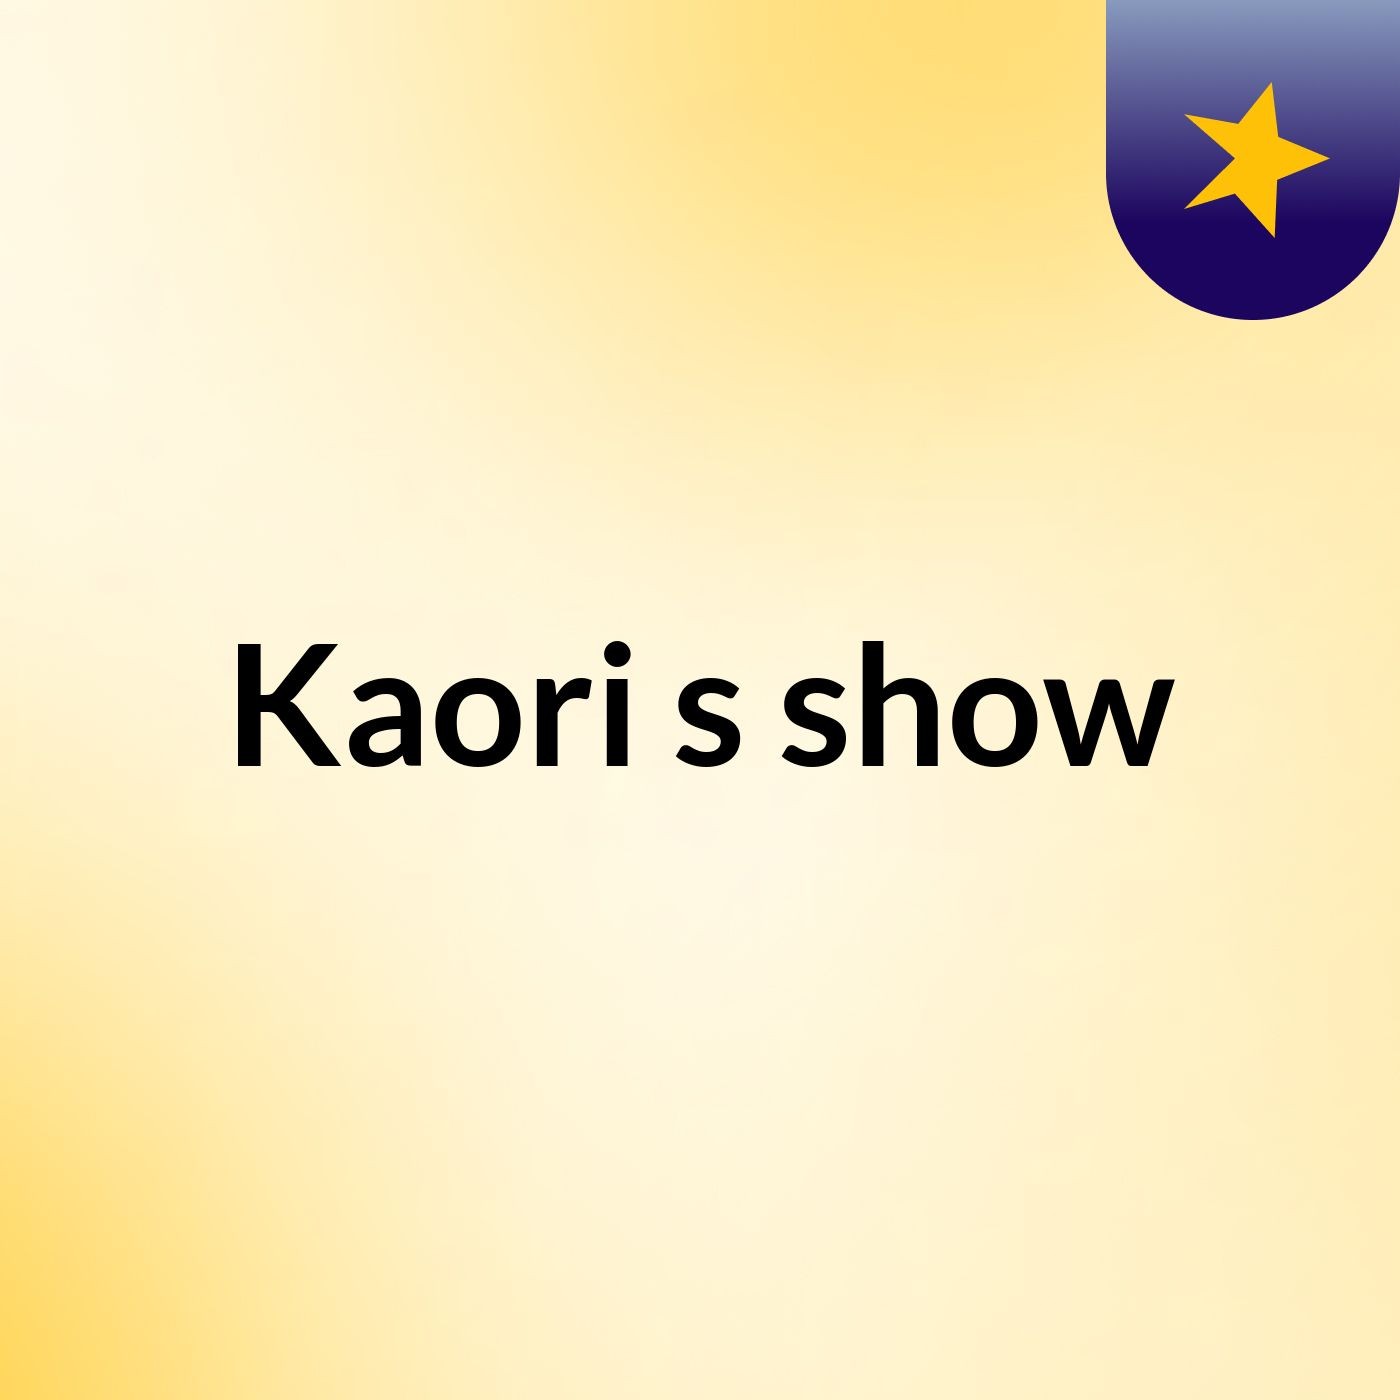 Kaori's show